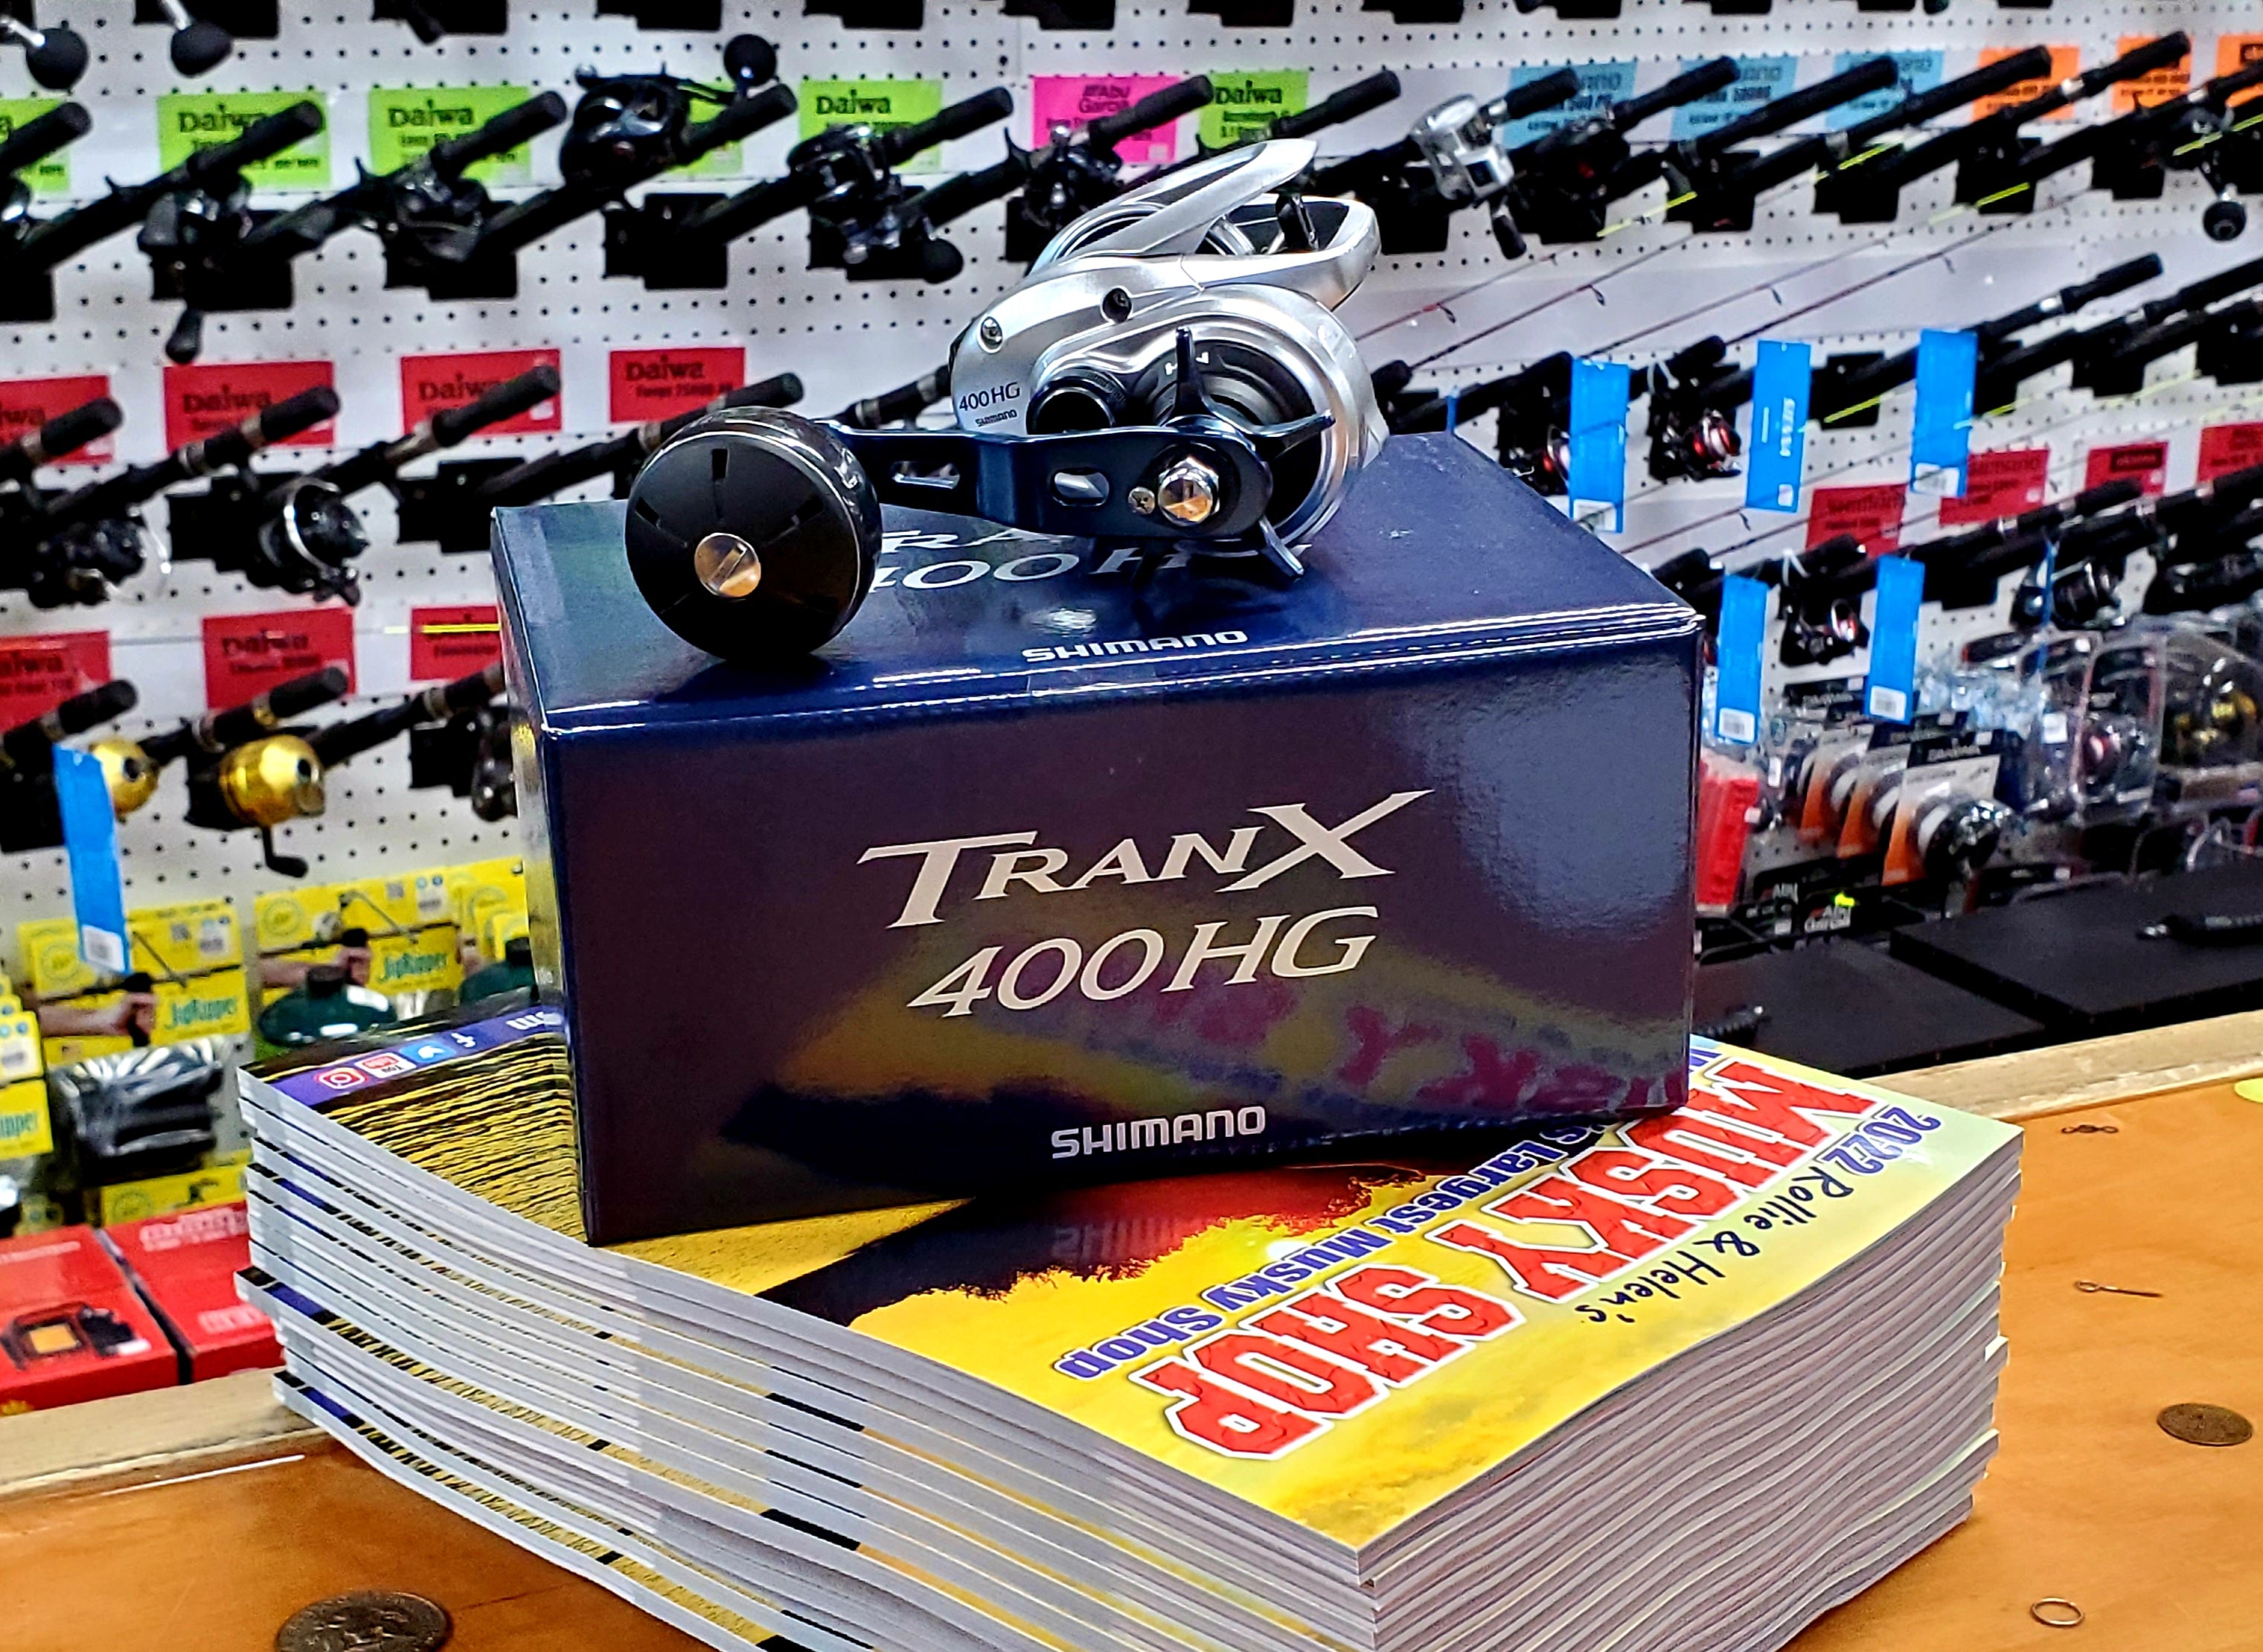 Gear: - The new TRANX 400 HS 7.6:1